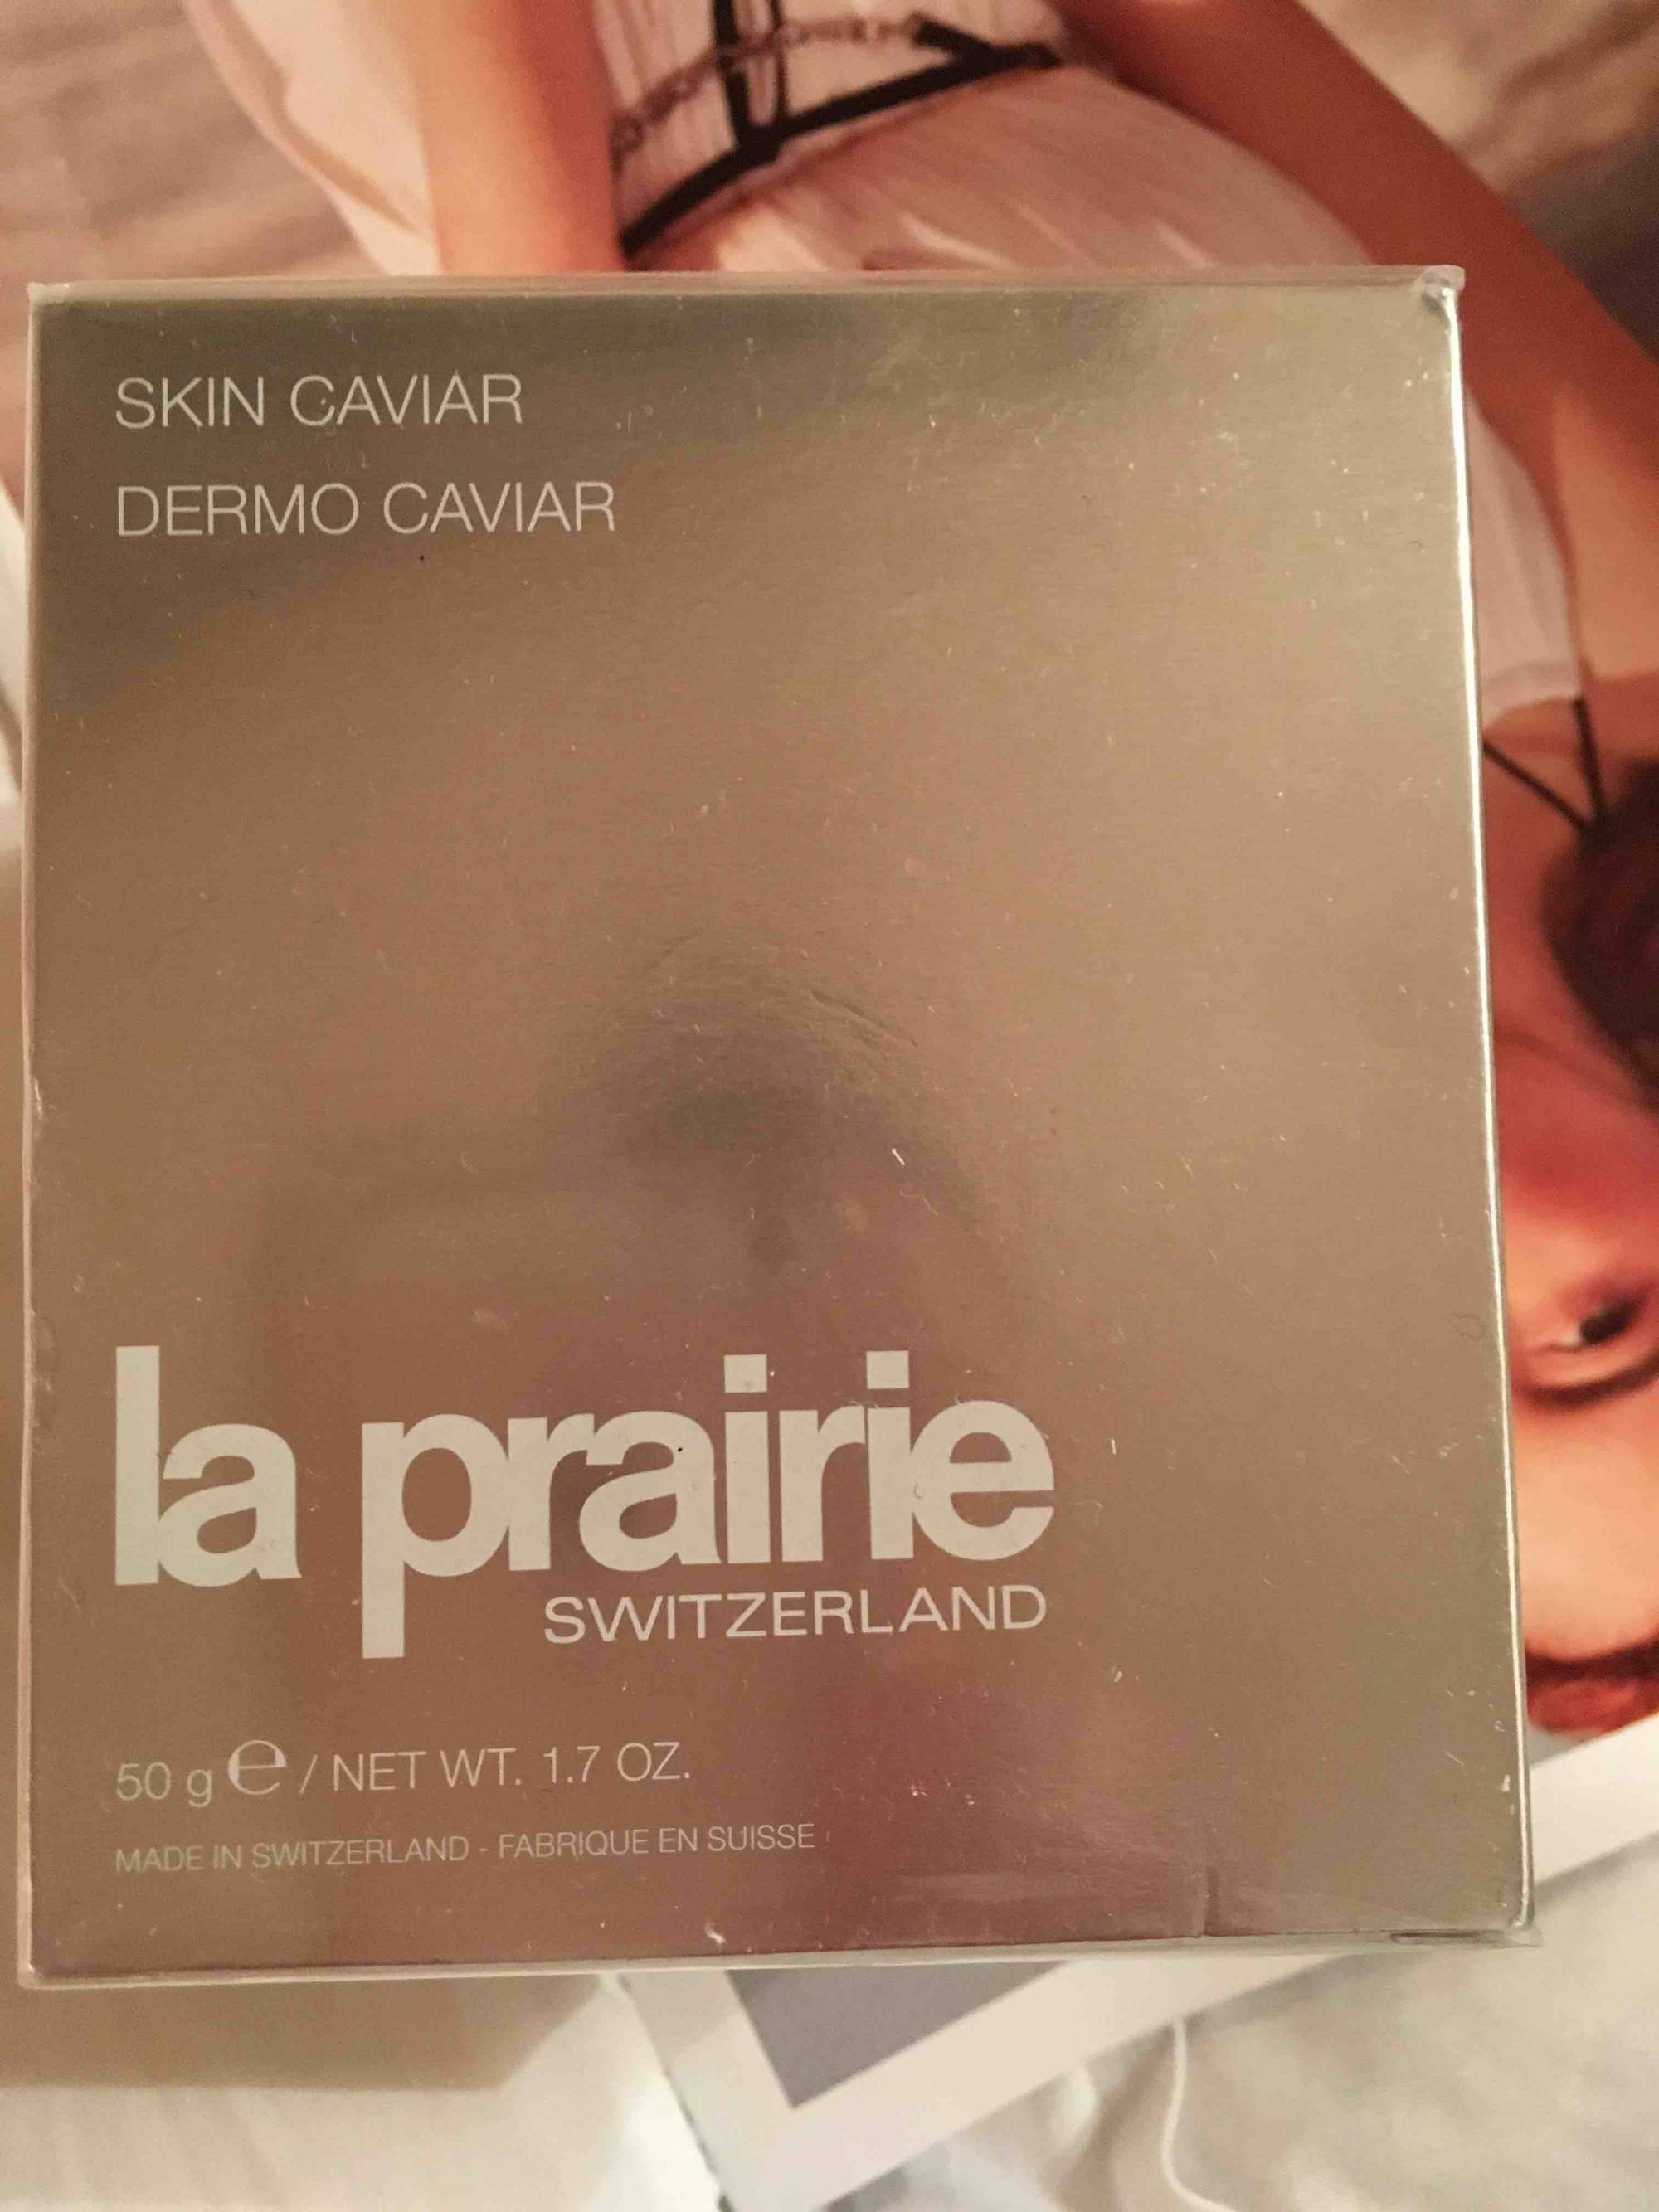 LA PRAIRIE - Dermo caviar - Skin caviar